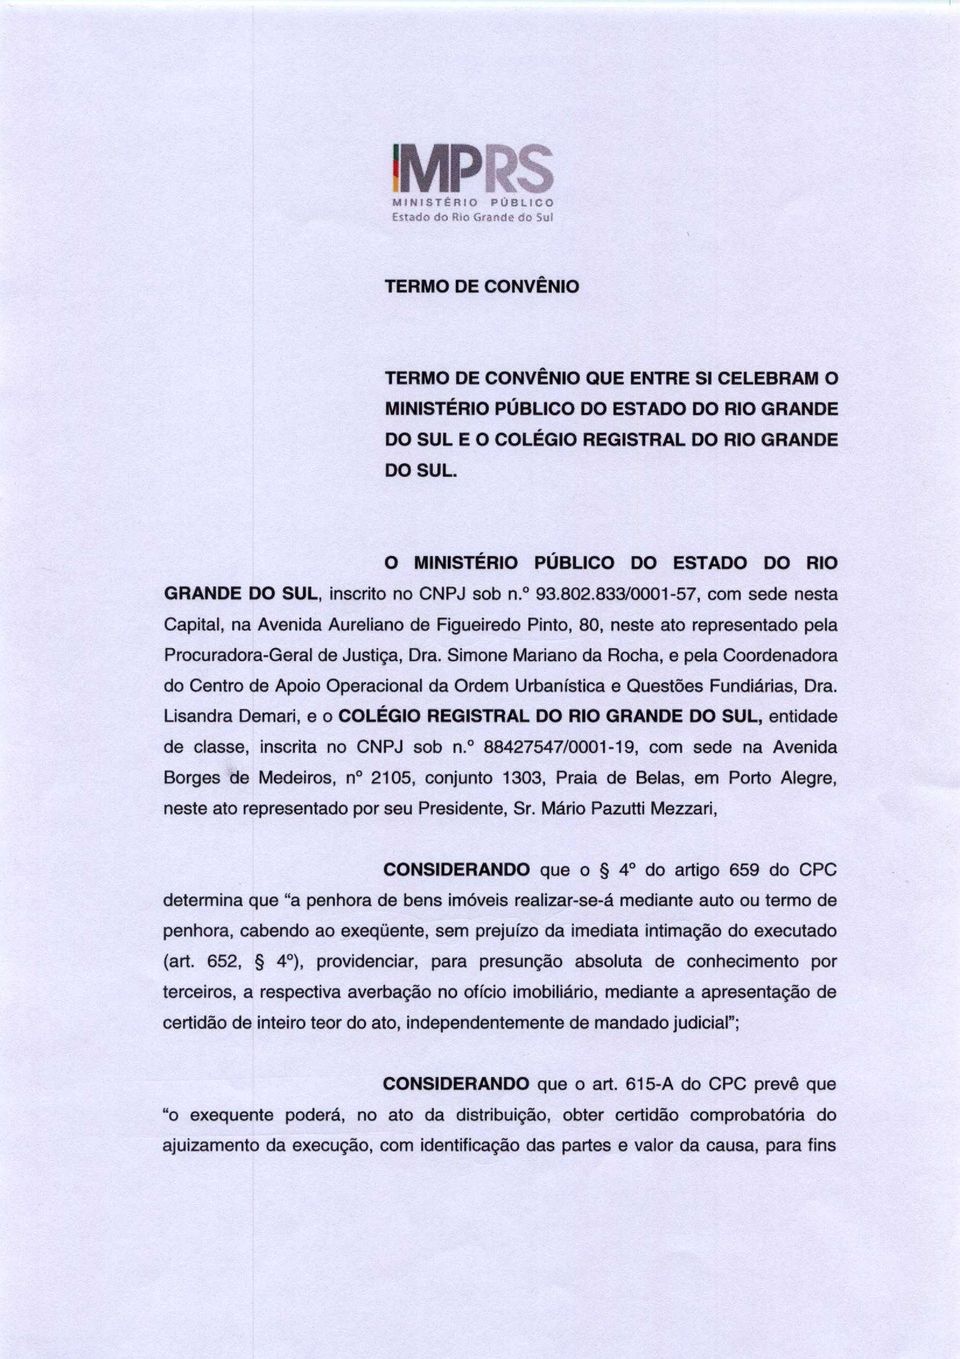 833/0001-57, corn sede nesta Capital, na Avenida Aureliano de Figueiredo Pinto, 80, neste ato representado pela Procuradora-Geral de Justiga, Dra.